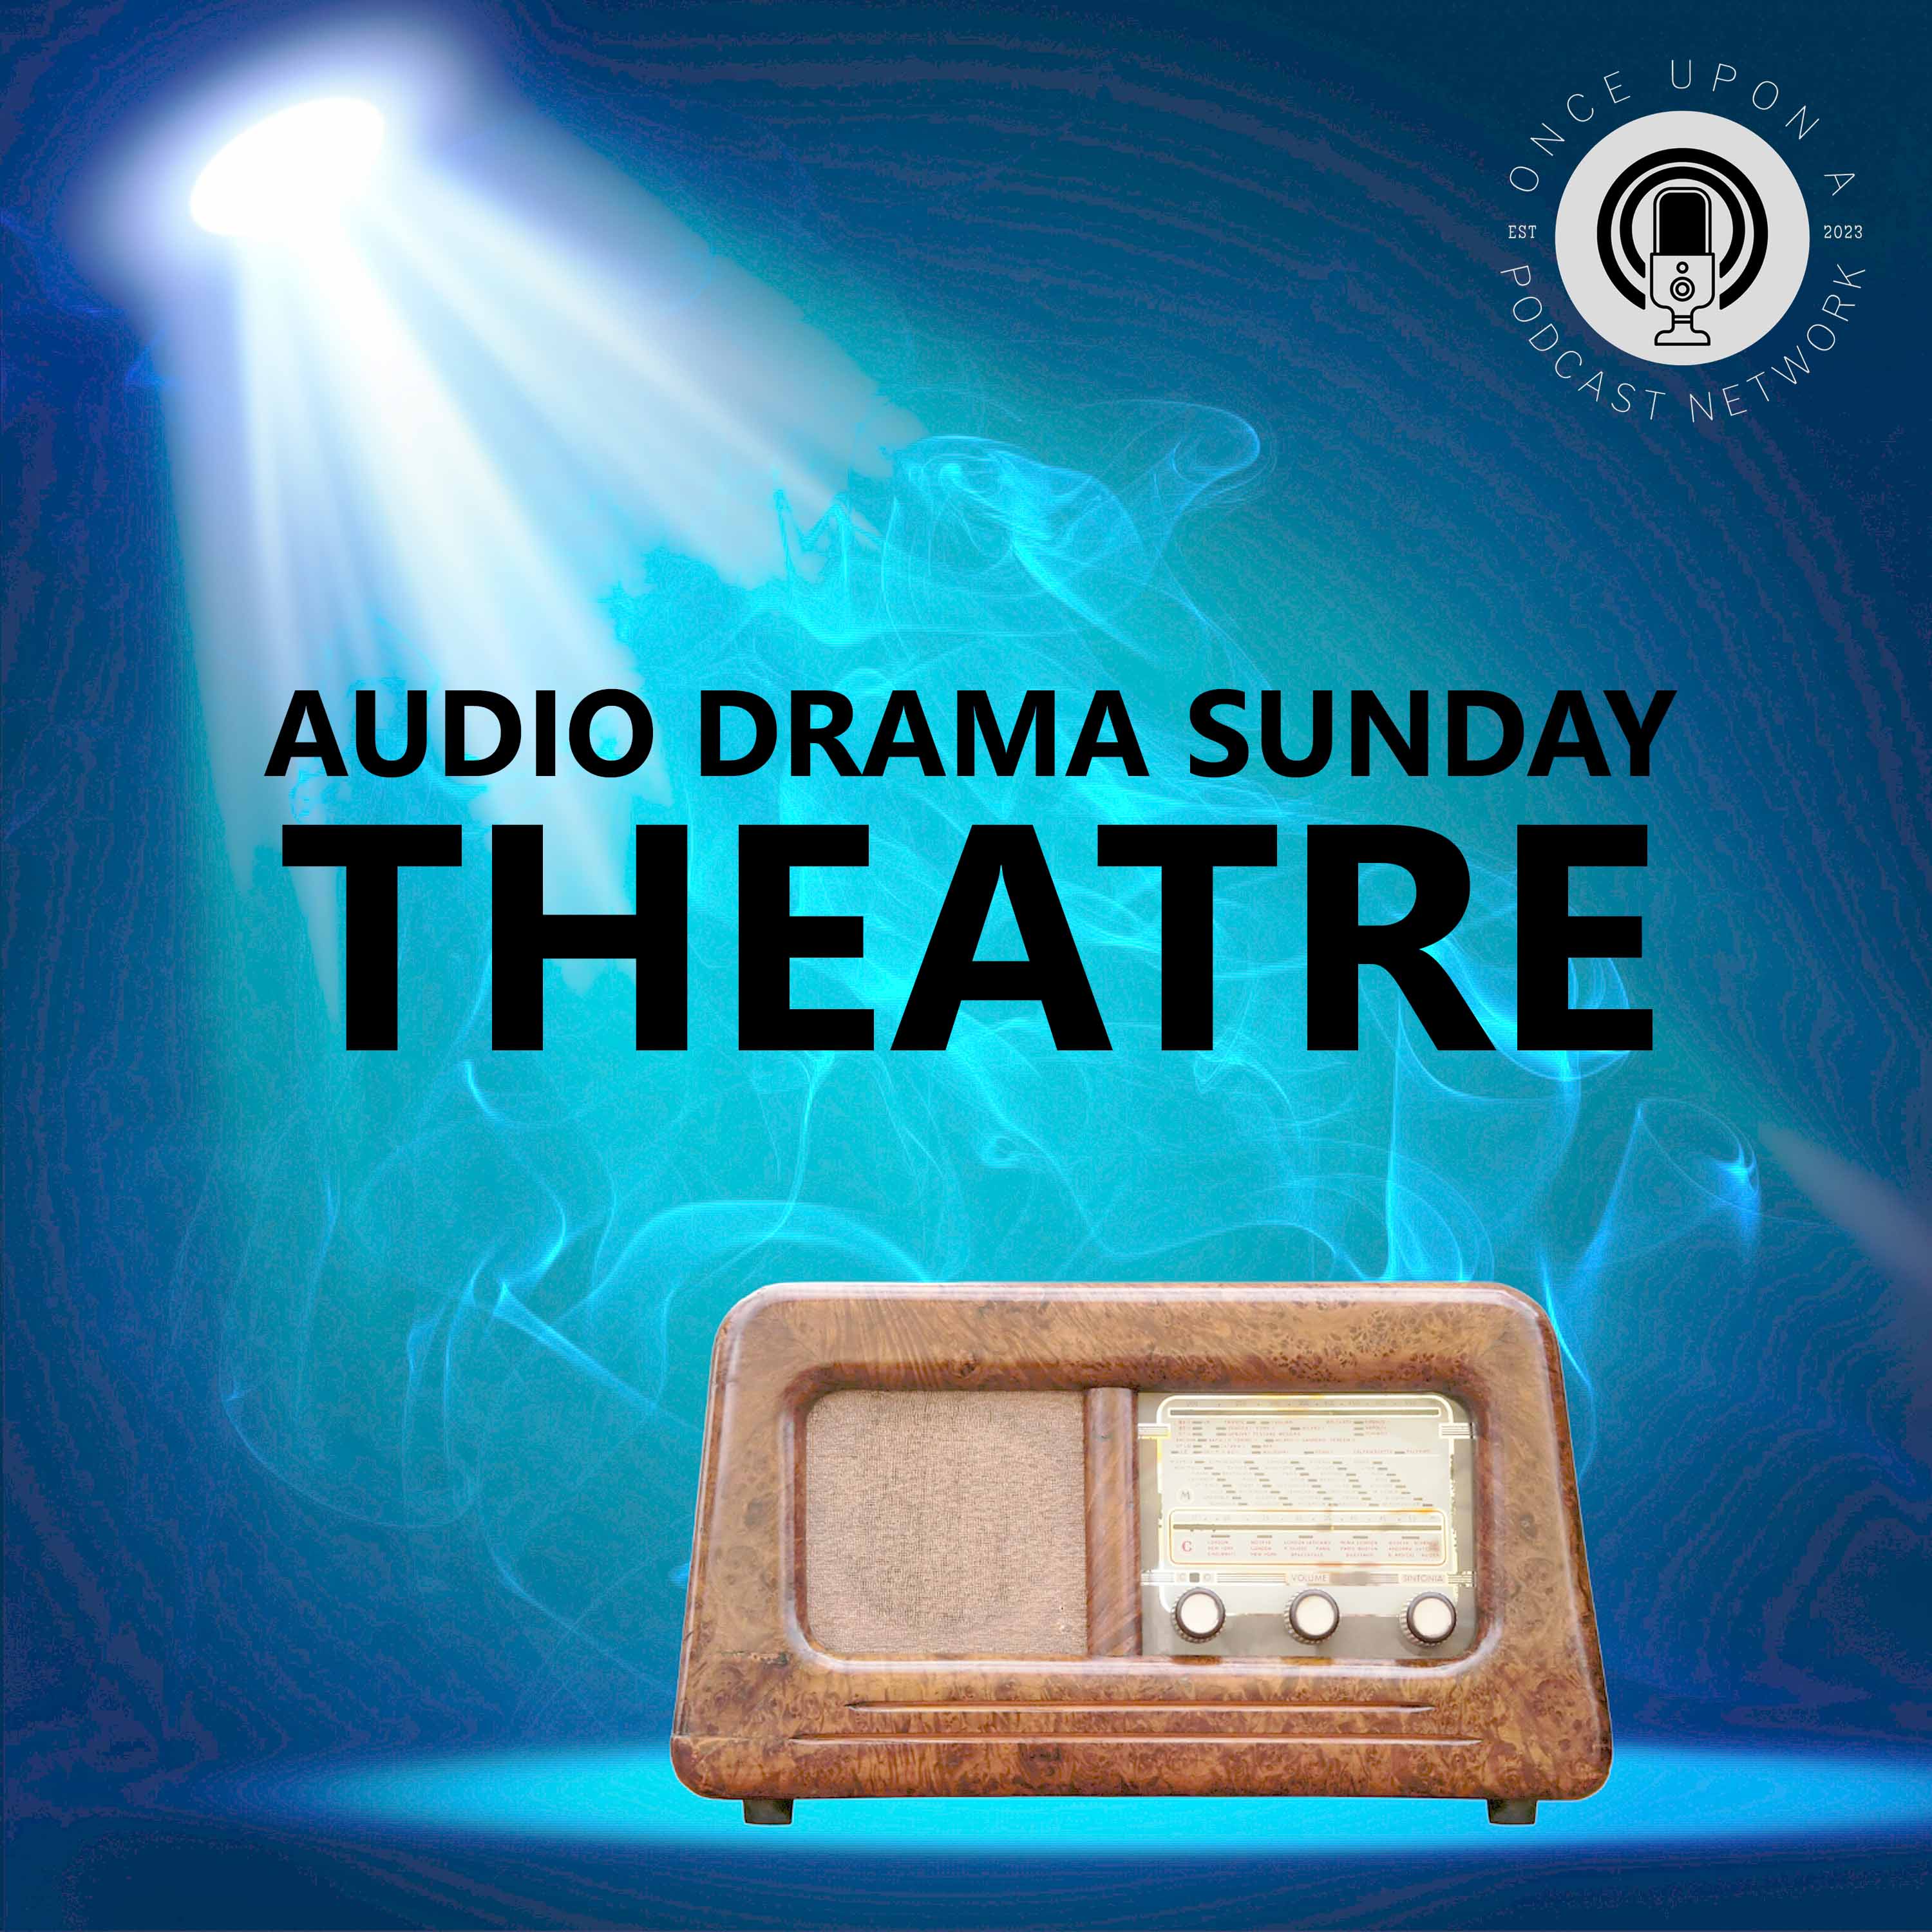 Audio Drama Sunday Theatre's artwork